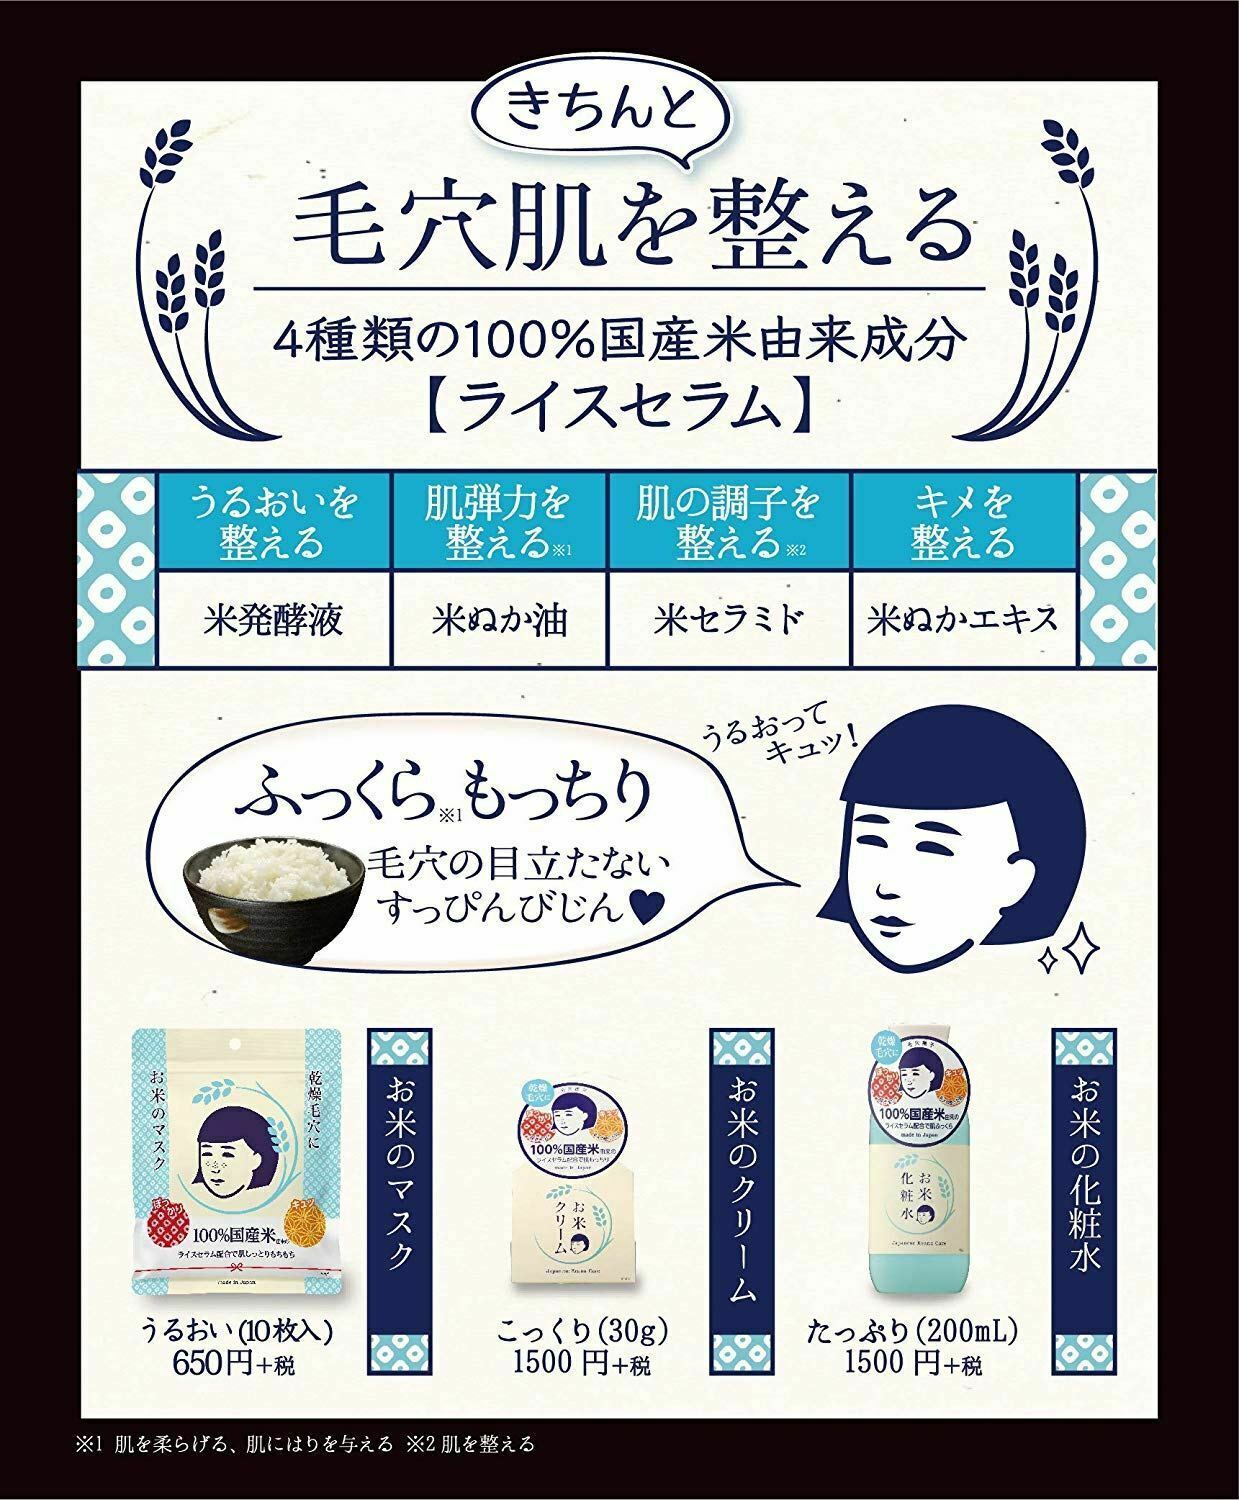 
                  
                    【VALUE SET】 KEANA Baking Soda Scrub Wash Facial Cleanning Powder 100g+JAPAN ISHIZAWA LABS KEANA NADESHIKO Moist Rice Mask 10 Pcs Combo Set
                  
                